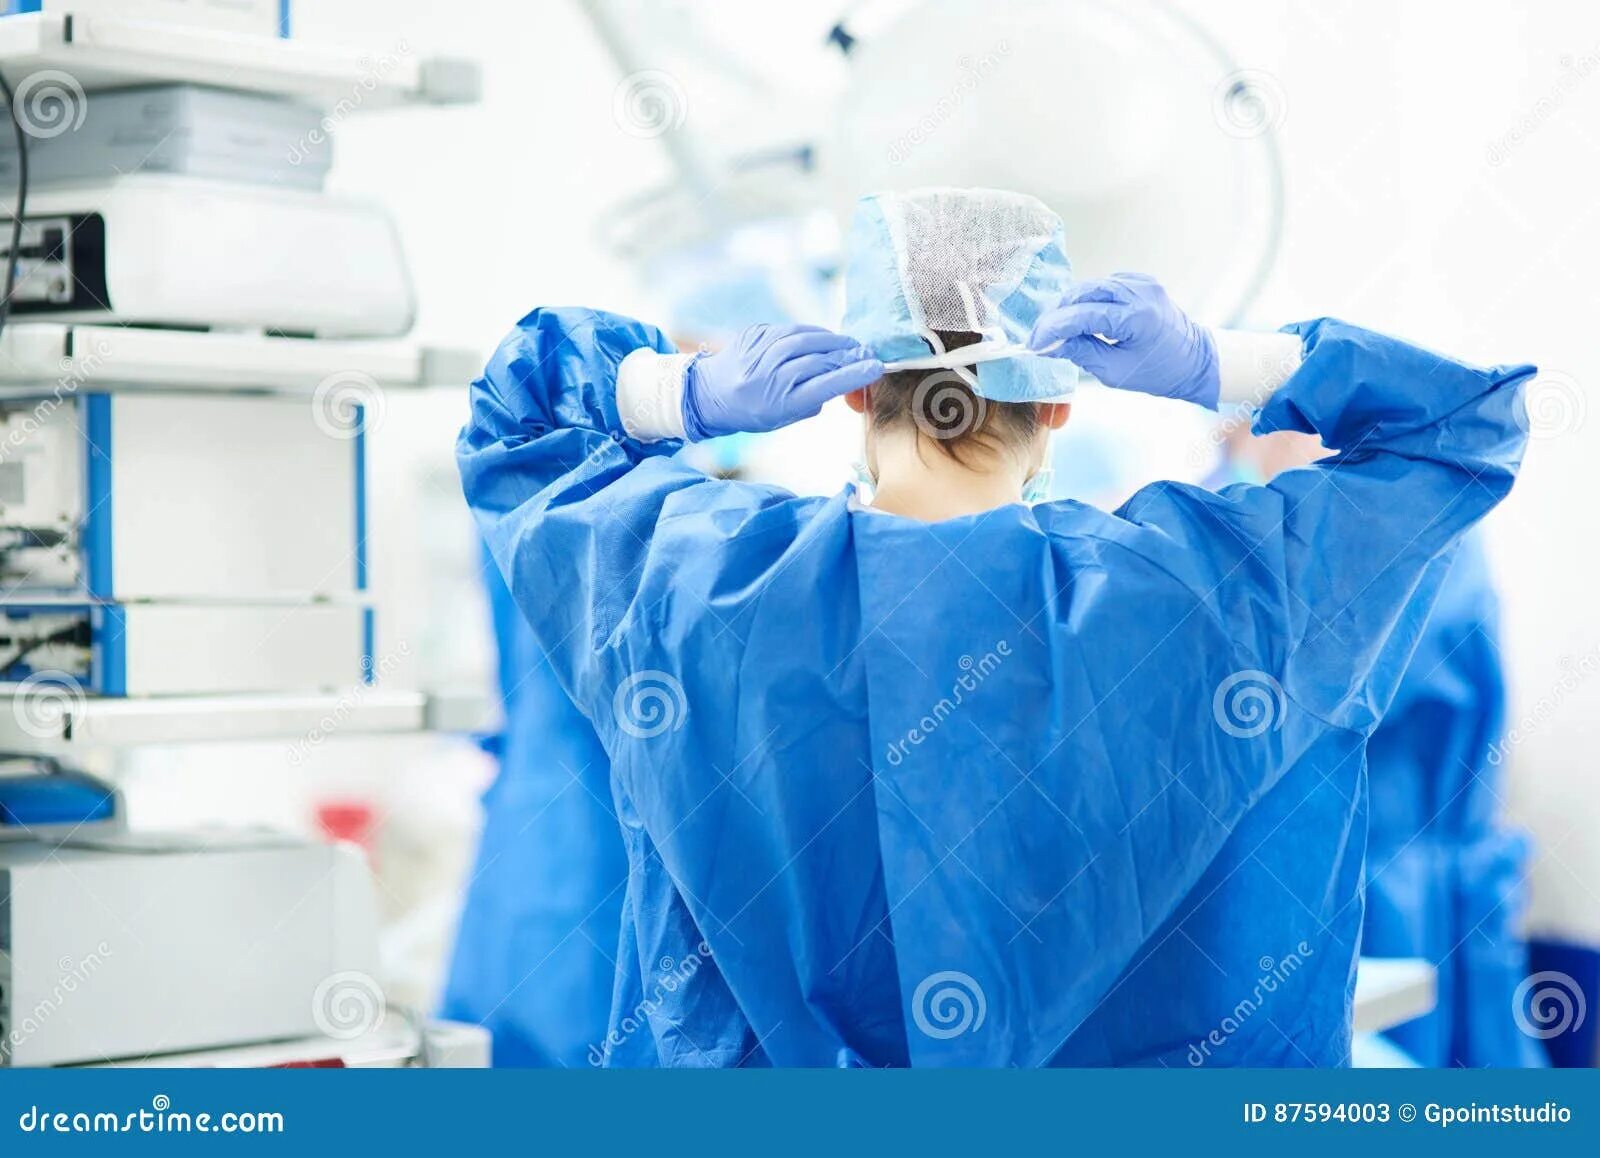 Подготовка рук к операции. Руки доктора перед операцией. Подготовка рук к операции картинки.